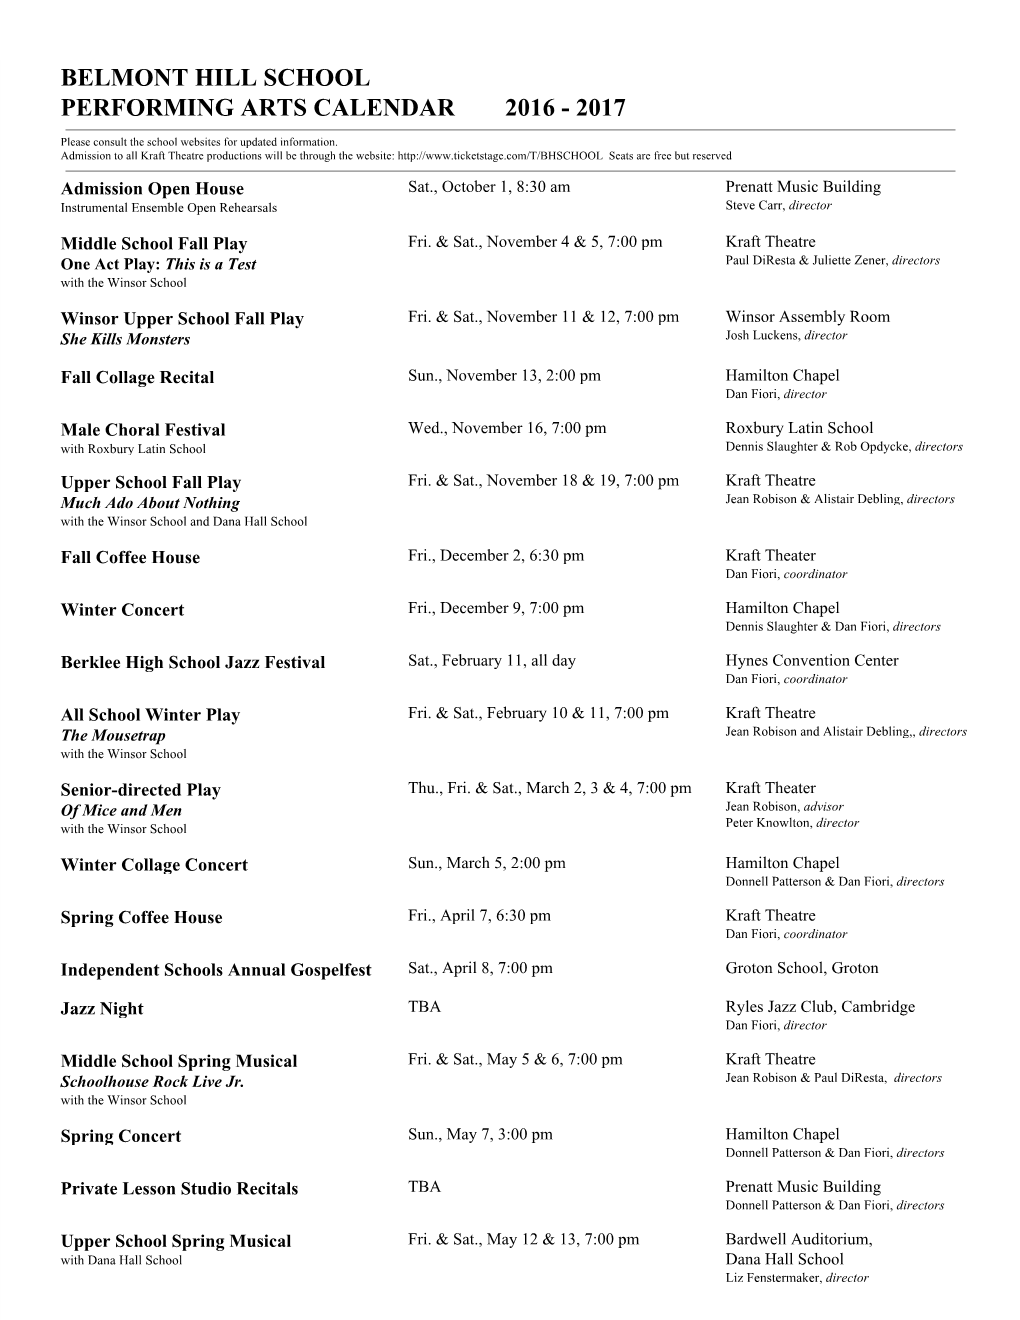 Belmont Hill School Performing Arts Calendar 2016 - 2017